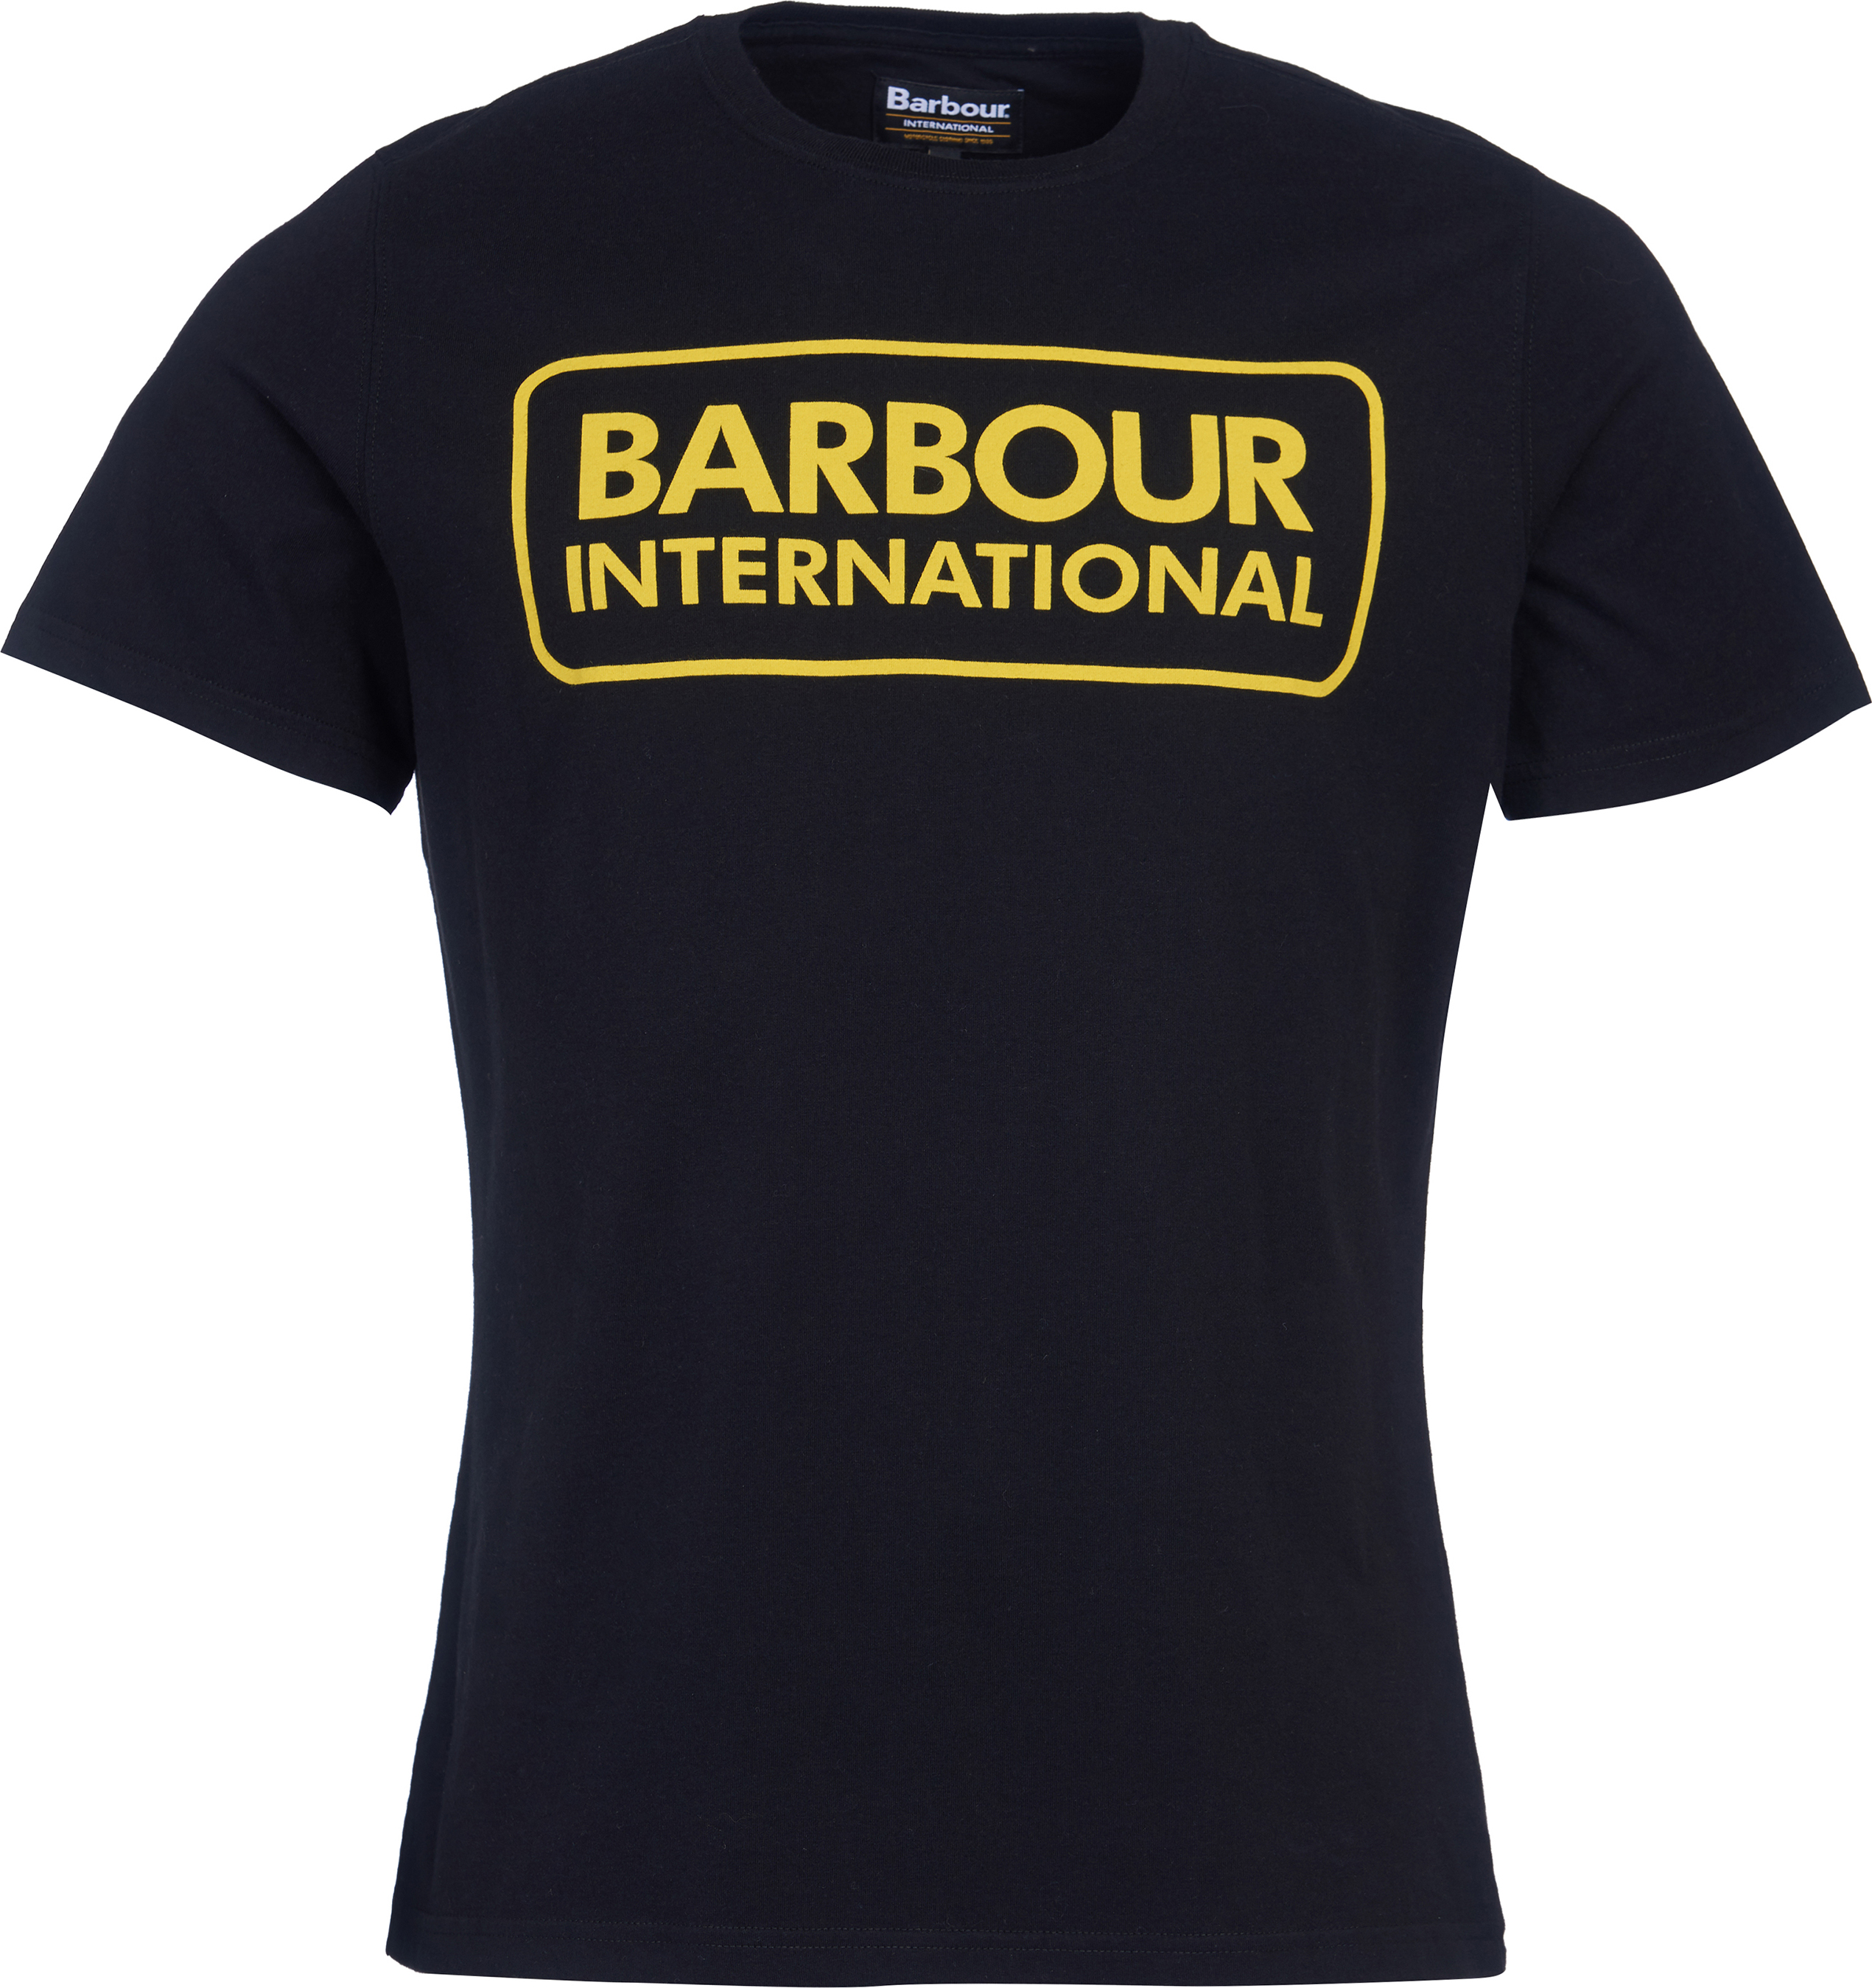 Barbour Men's Barbour International Essential Large Logo Tee Black S, Black